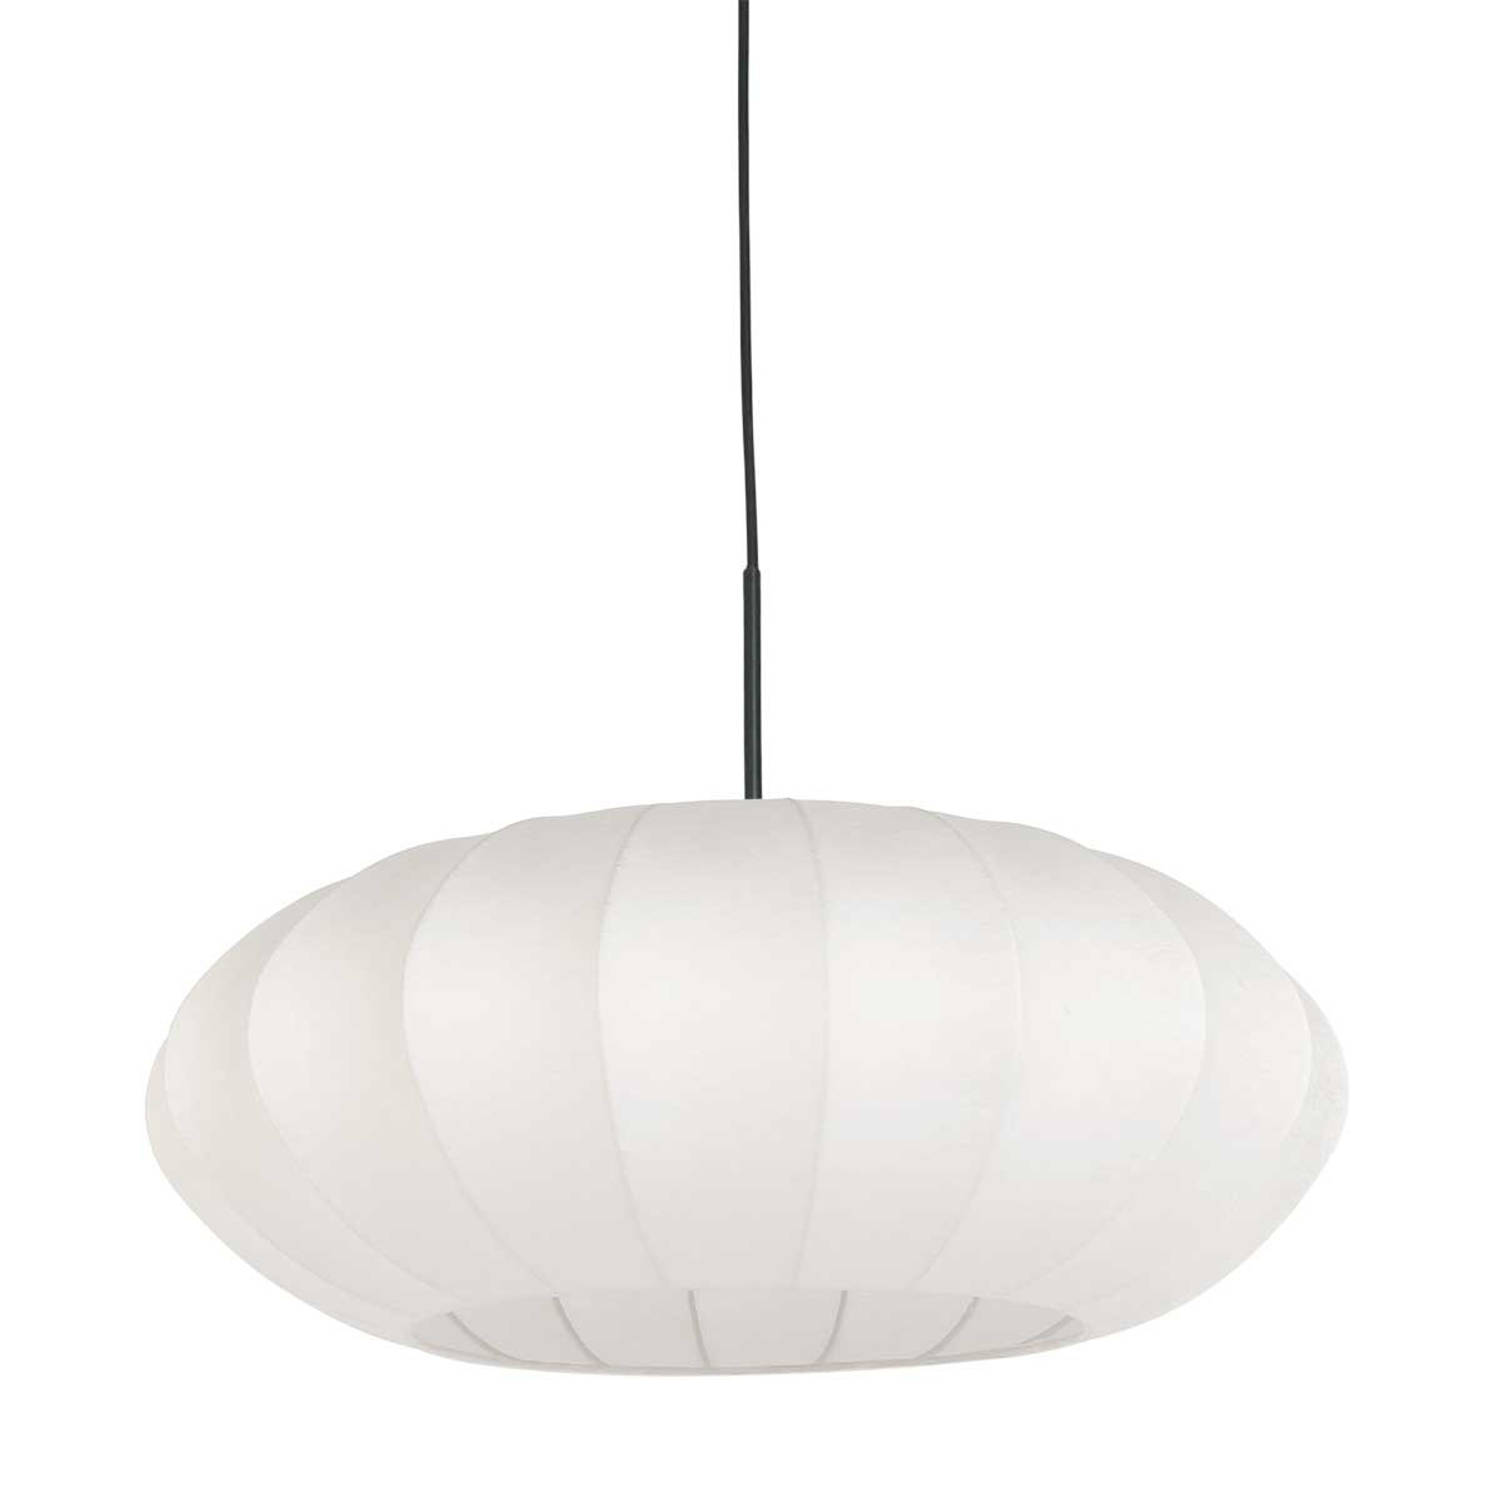 Steinhauer Sparkled light hanglamp - ø 60 cm - In hoogte verstelbaar - E27 (grote fitting) - wit en zwart